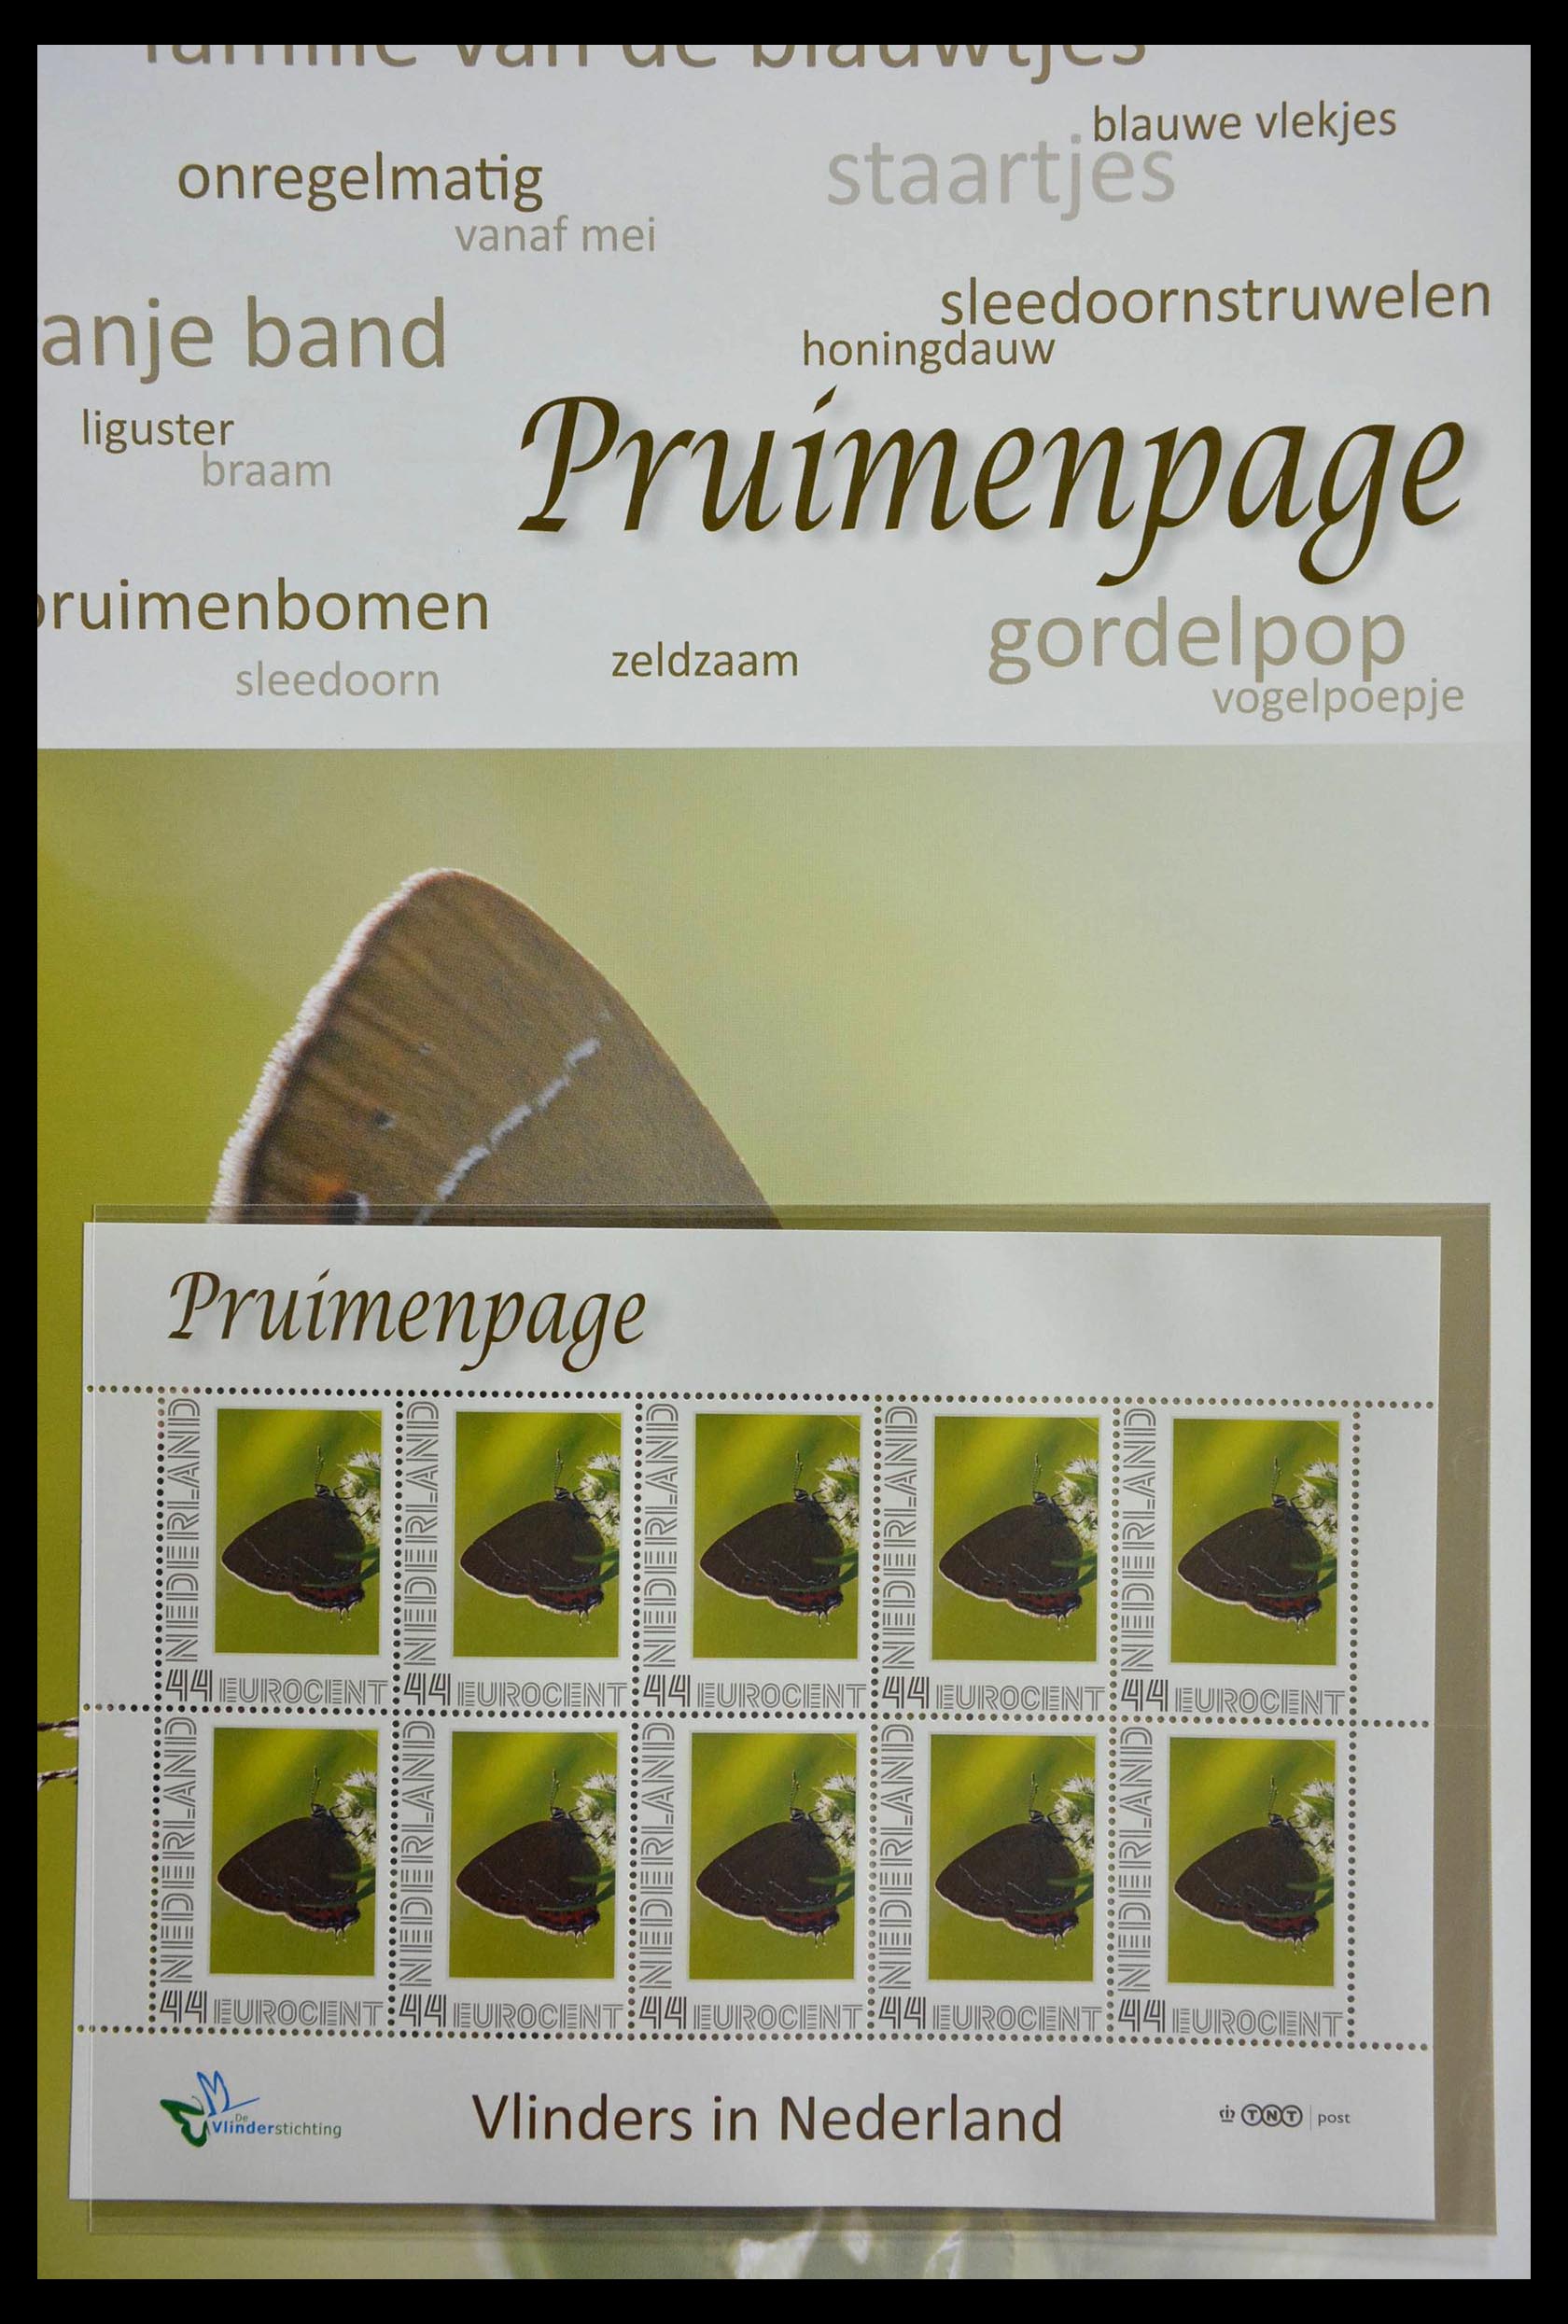 13105 015 - 13105 Butterflies in the Netherlands.